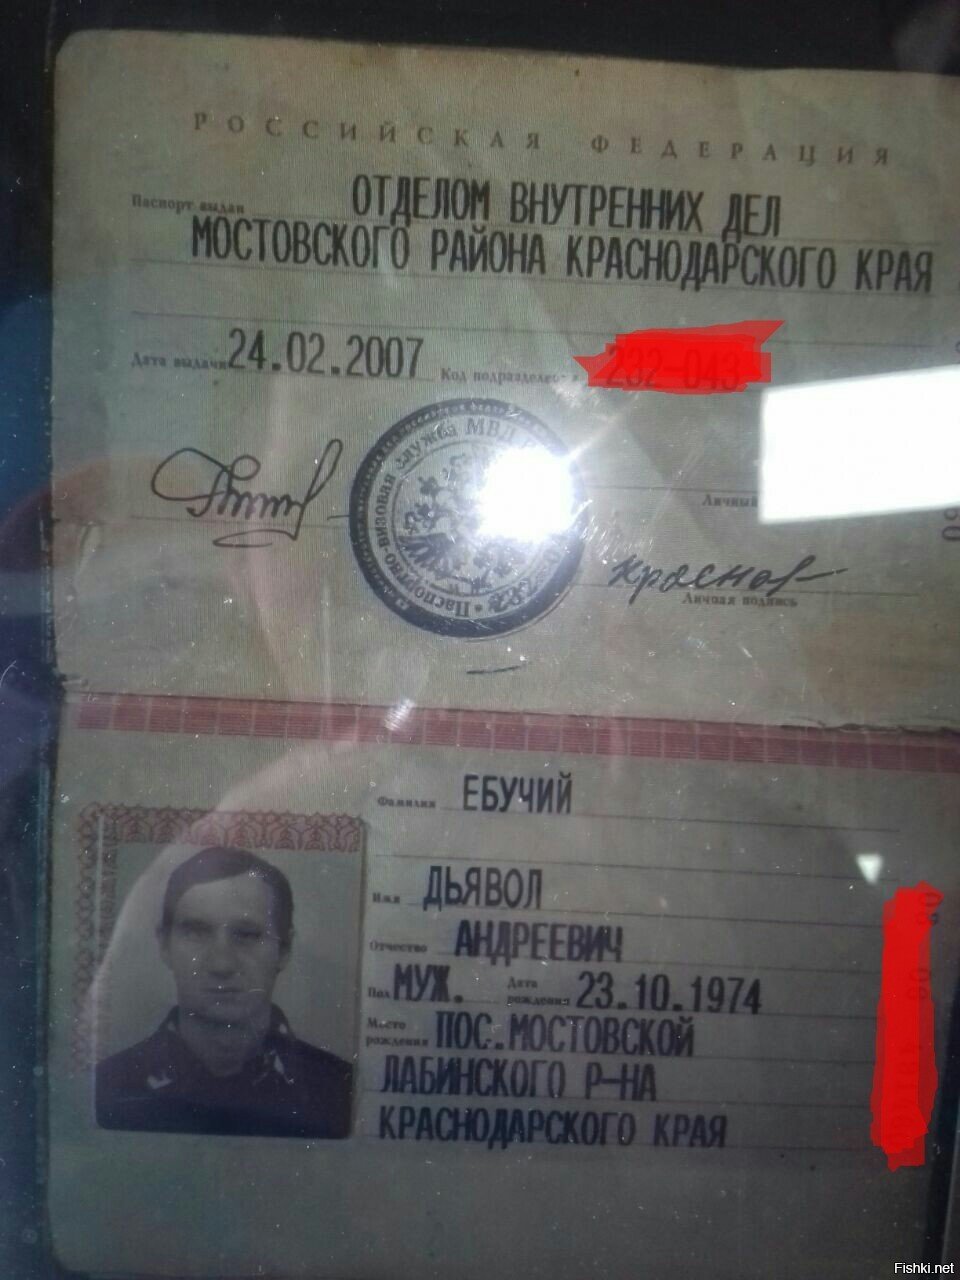 Паспорт Андреевич